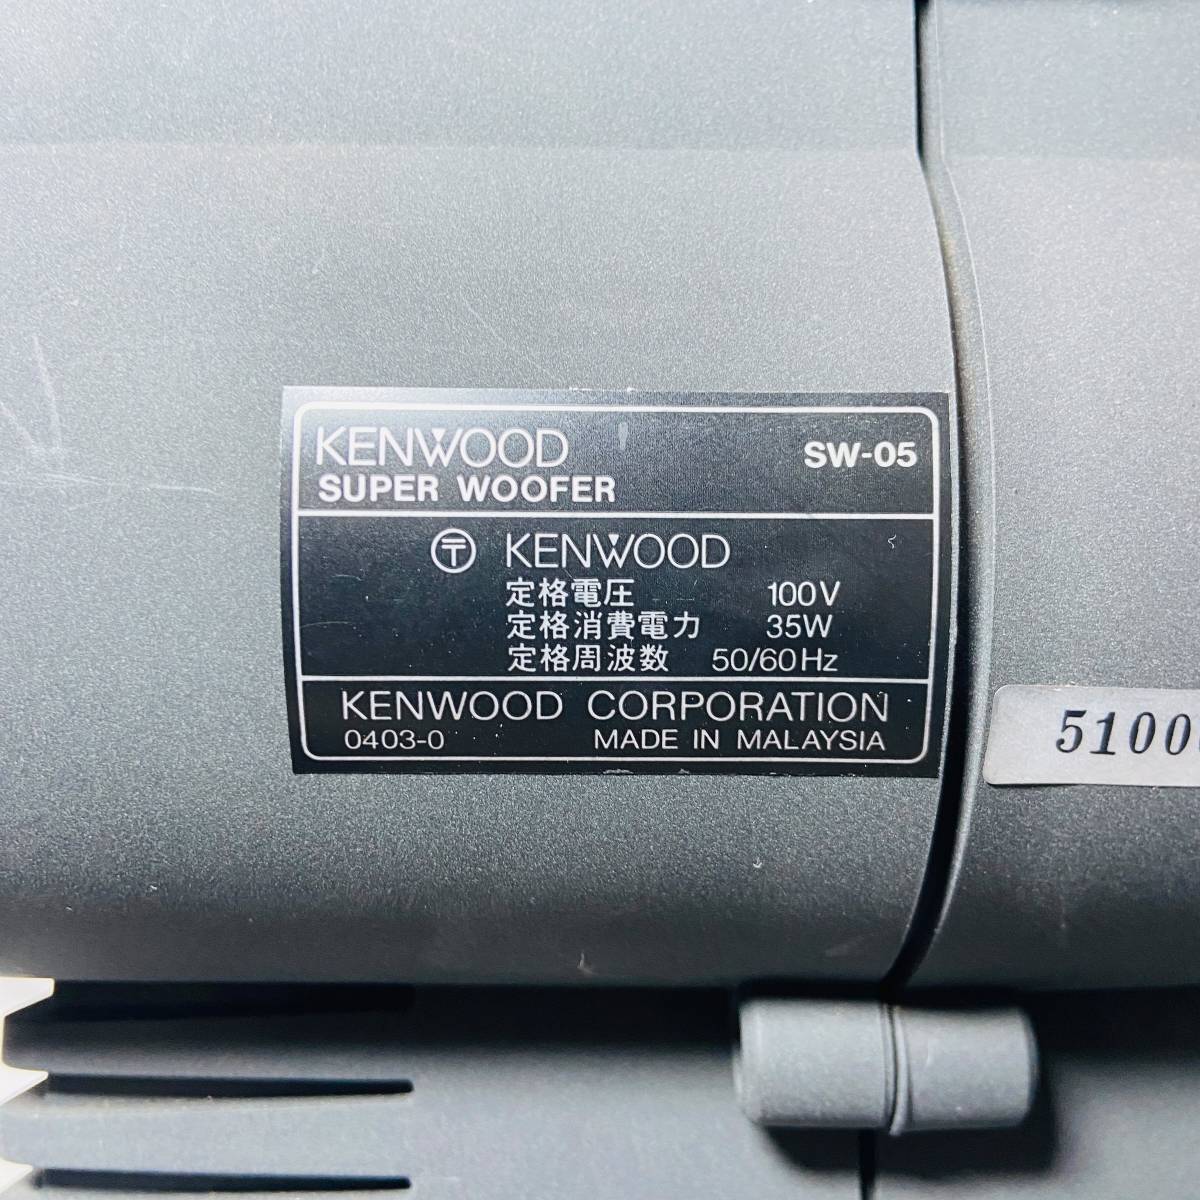 KENWOOD SW-05 super сабвуфер рабочий товар Kenwood сабвуфер звук оборудование 